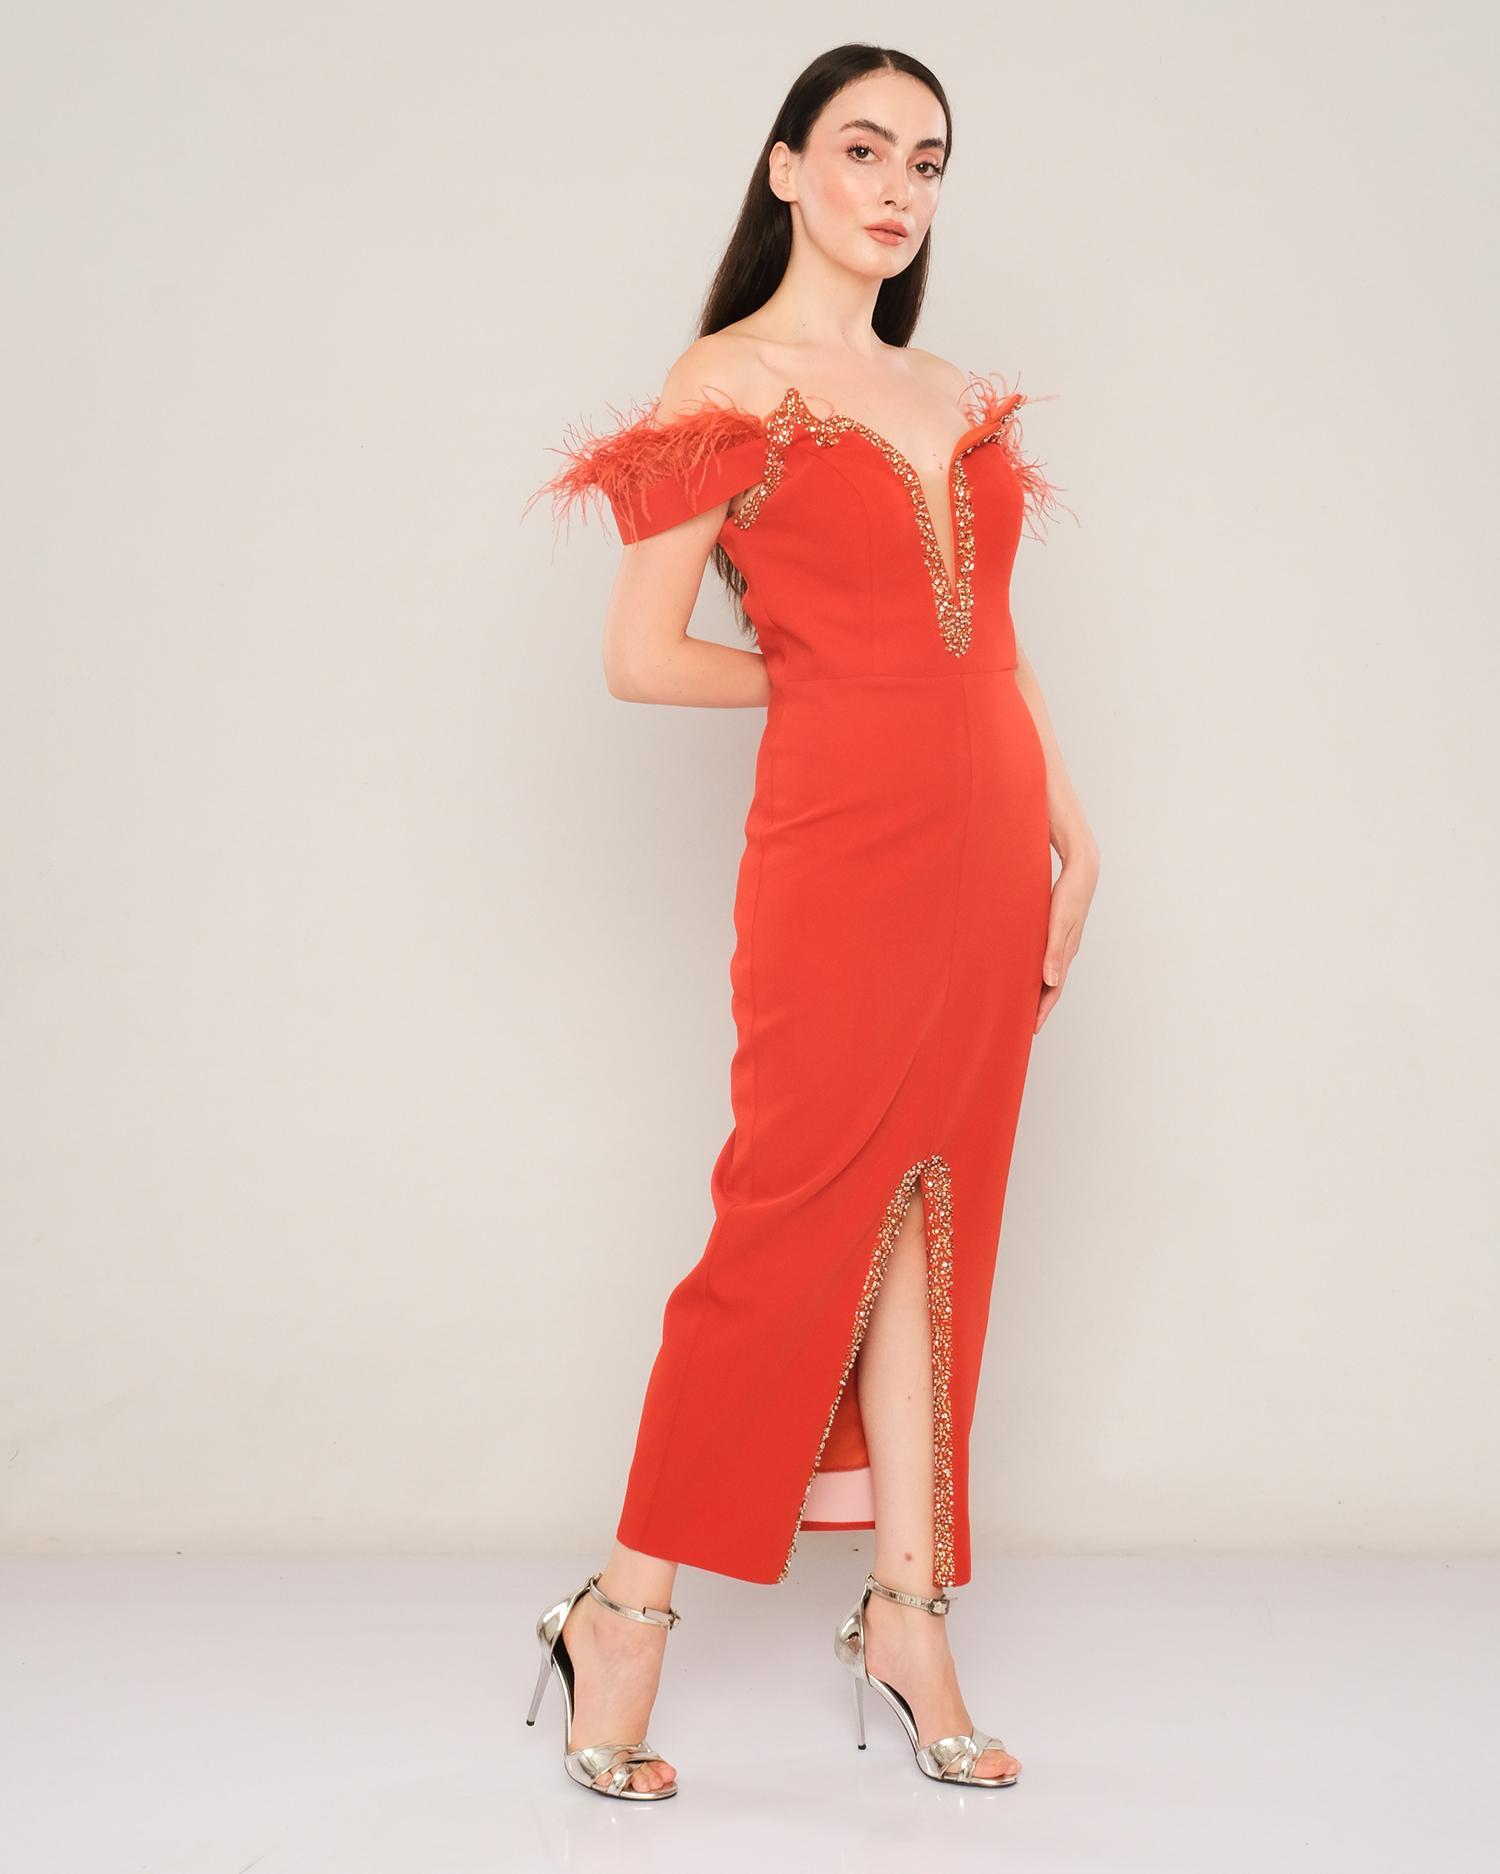 Odrella Night Wear Evening Dresses|Fimkastore.com: Online Shopping Wholesale  Womens Clothing